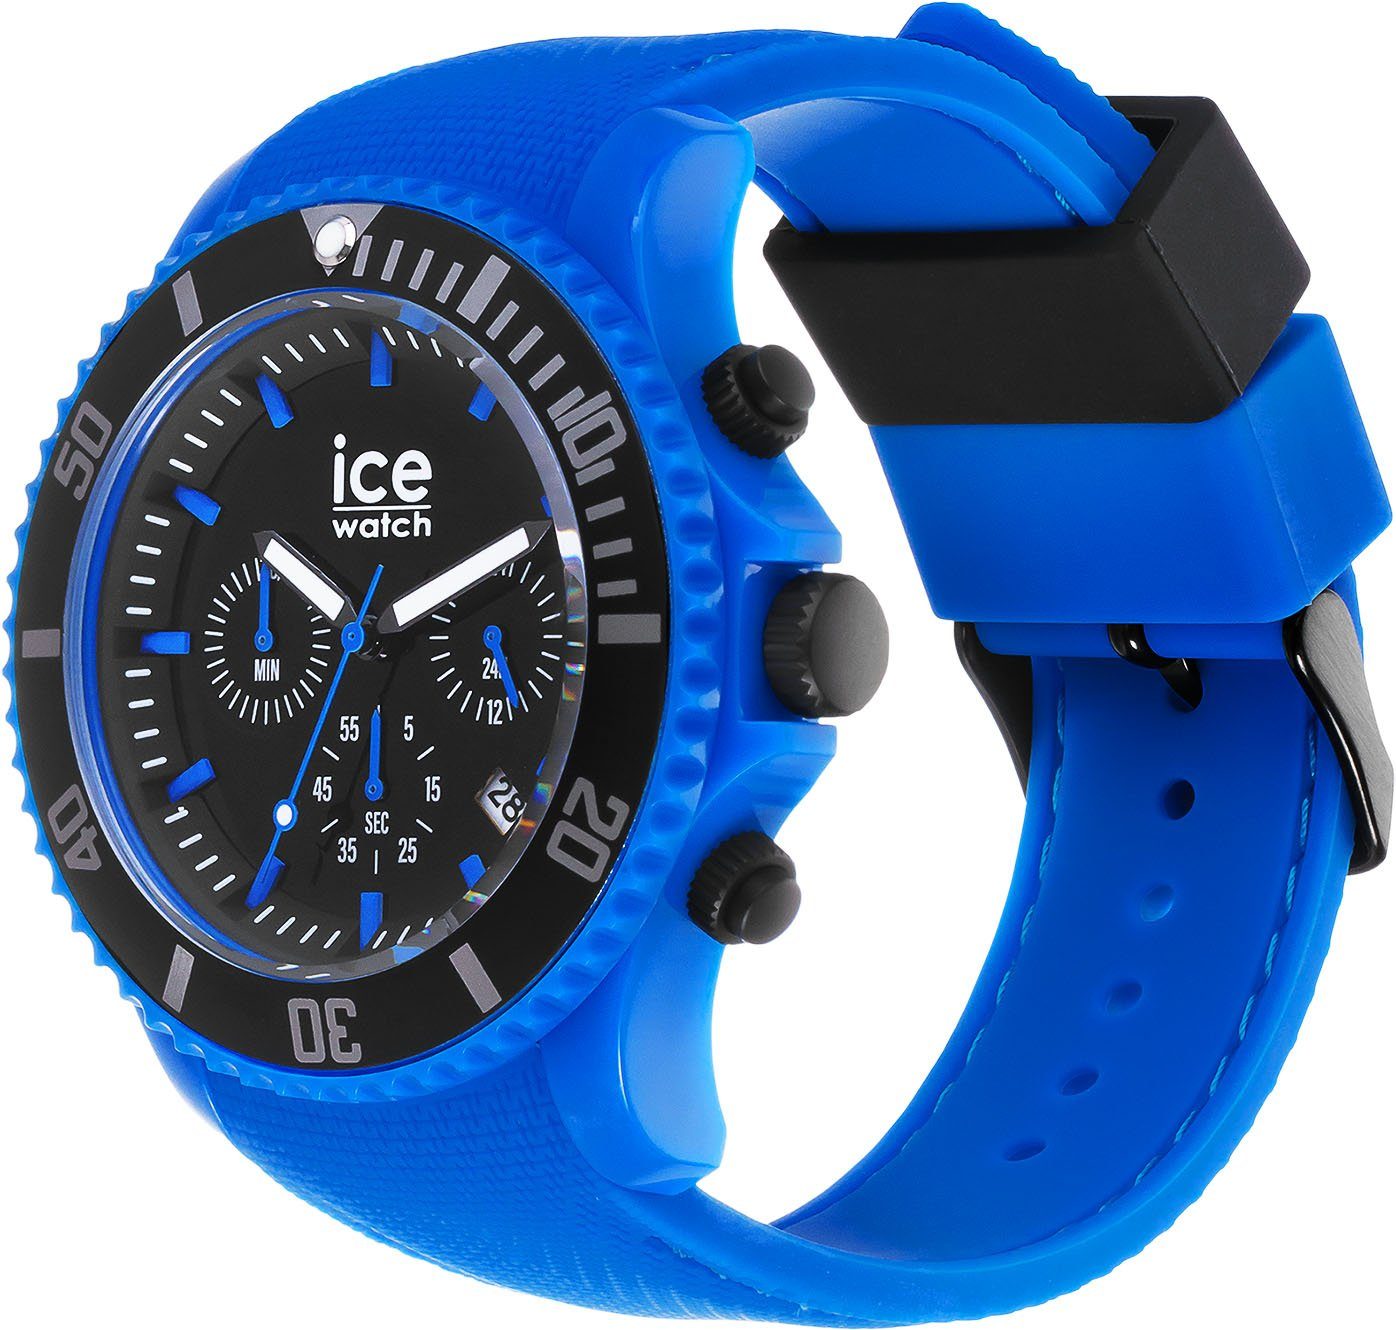 Neon - ice-watch chrono CH, Large - 019840 ICE blue Chronograph - blau